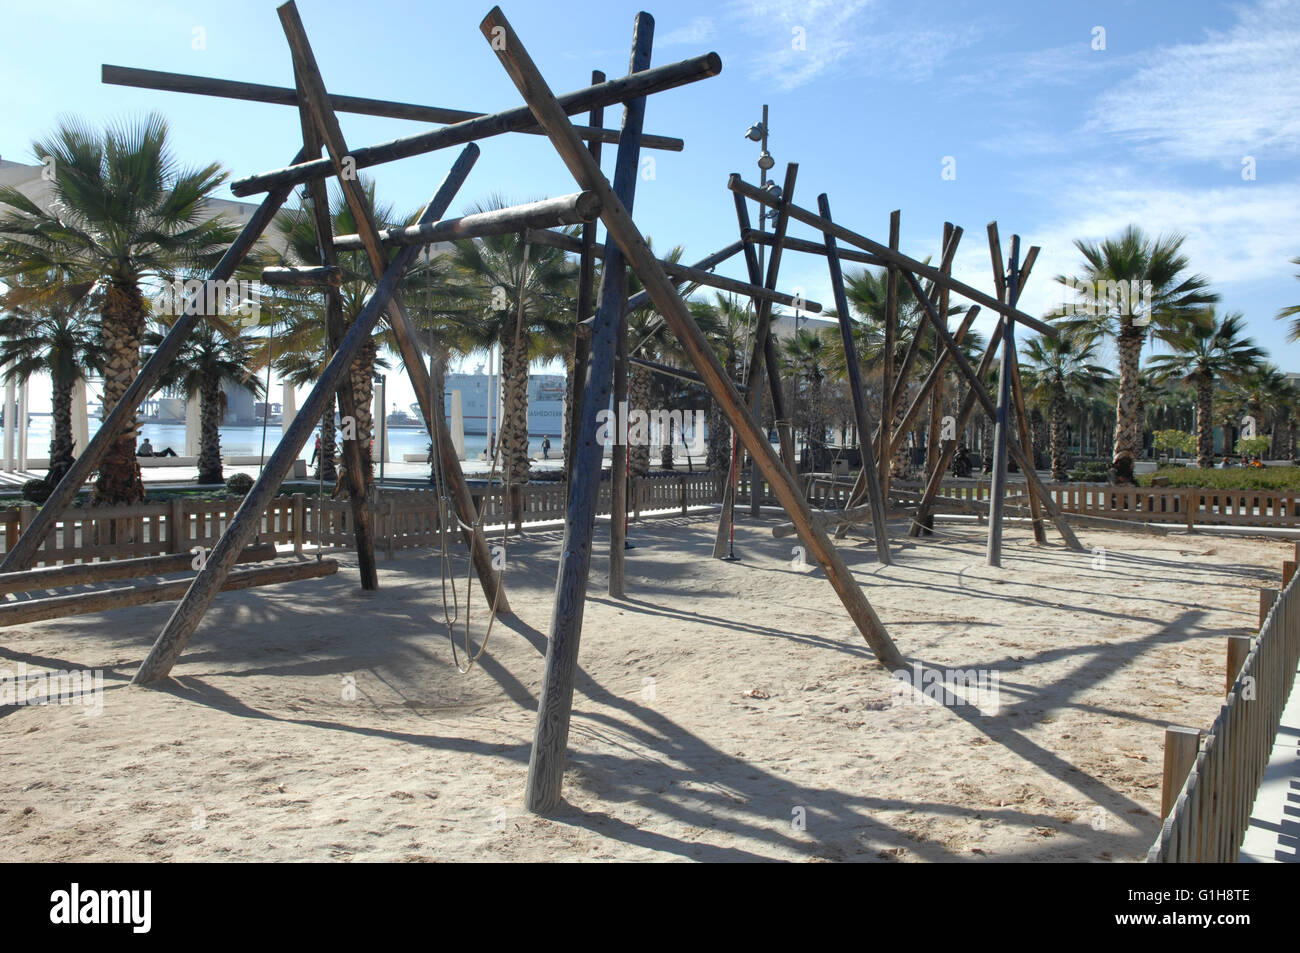 Playground next to Malaga marina for kids to play in - Malaga, Spain Stock Photo